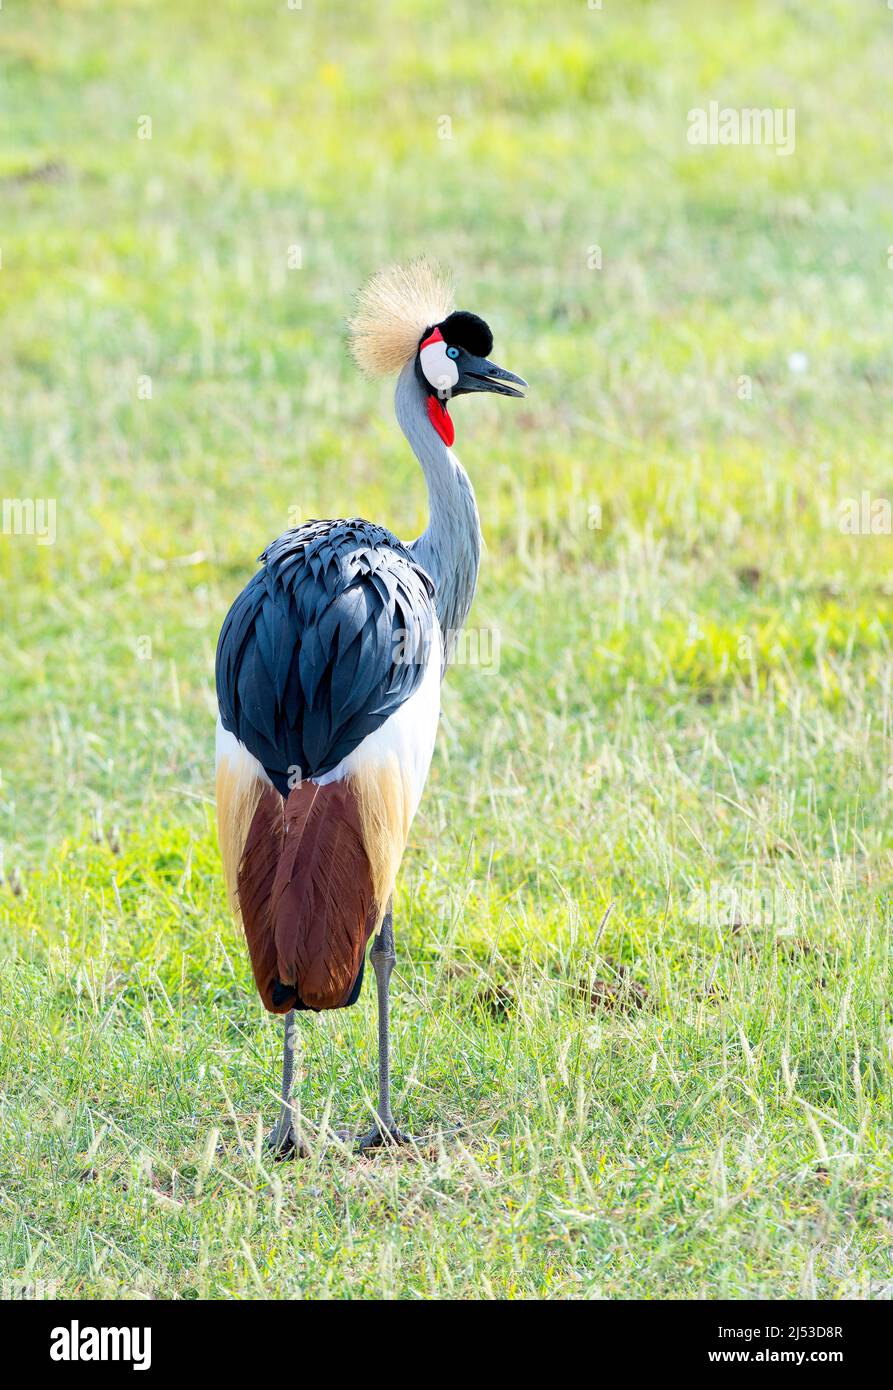 Black Crowned Crane in the savannas of Africa Stock Photo